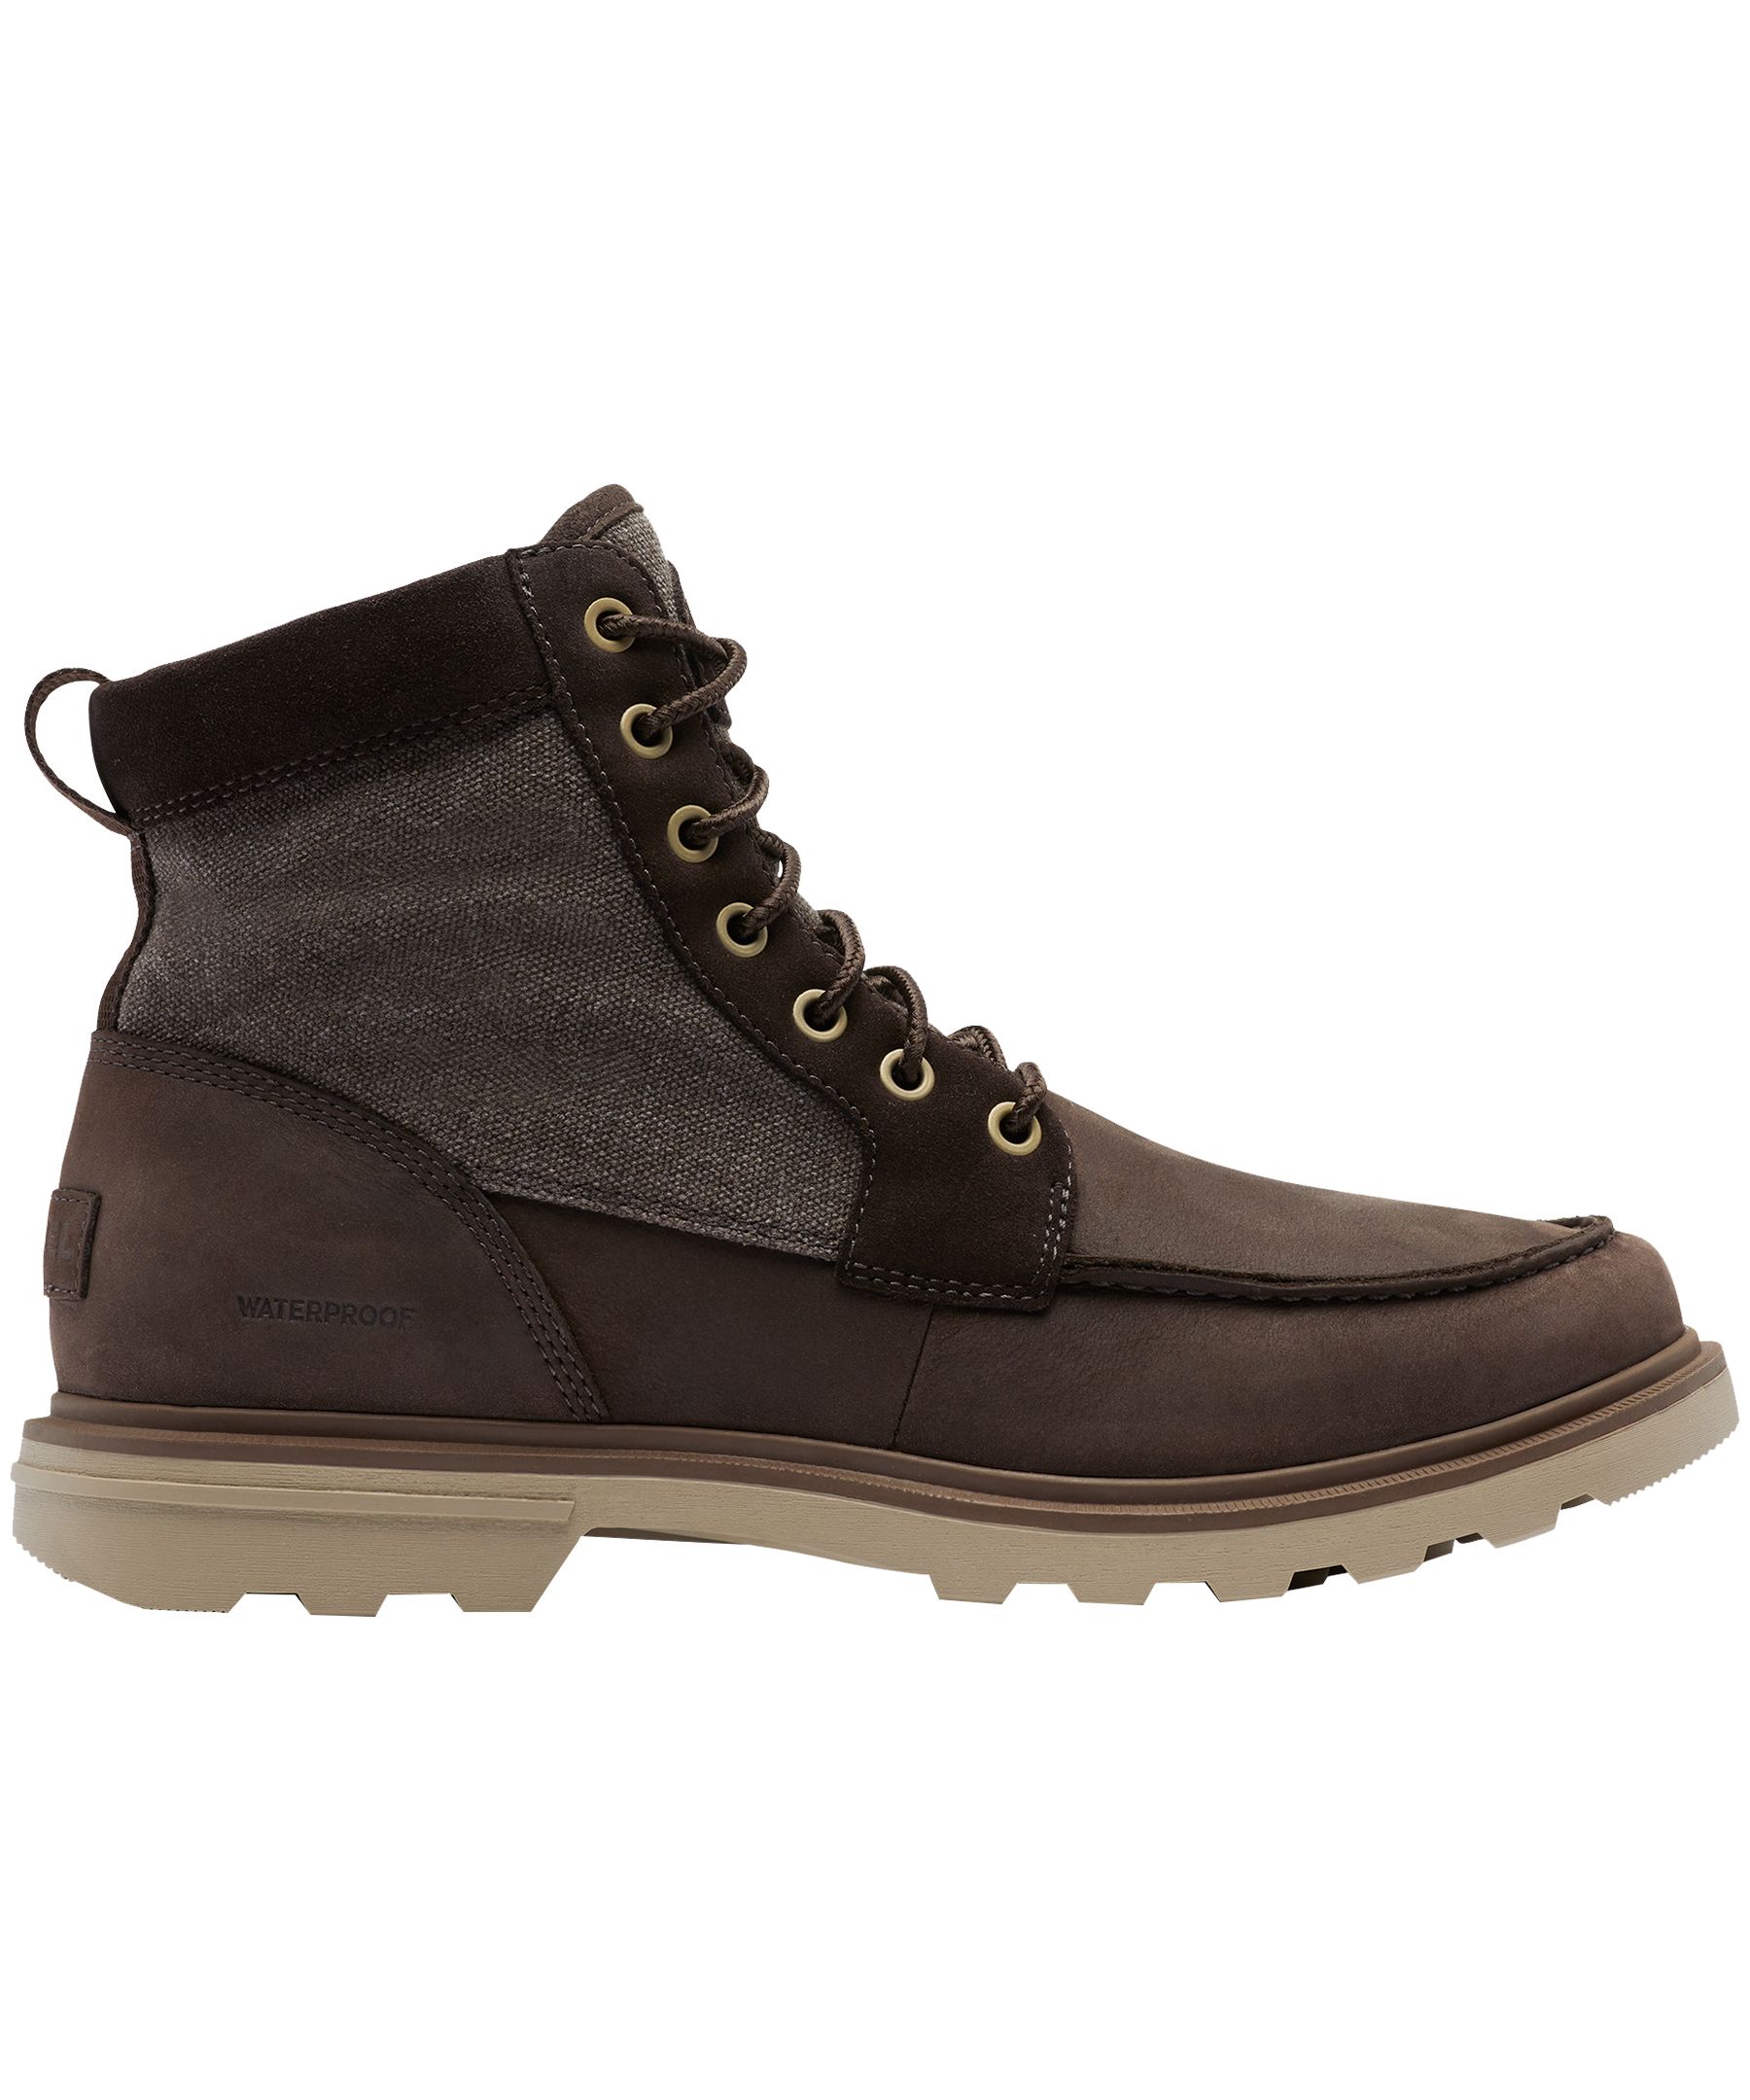 Sorel Men's Carson Moc Waterproof Boots - Blackened Brown/Khaki